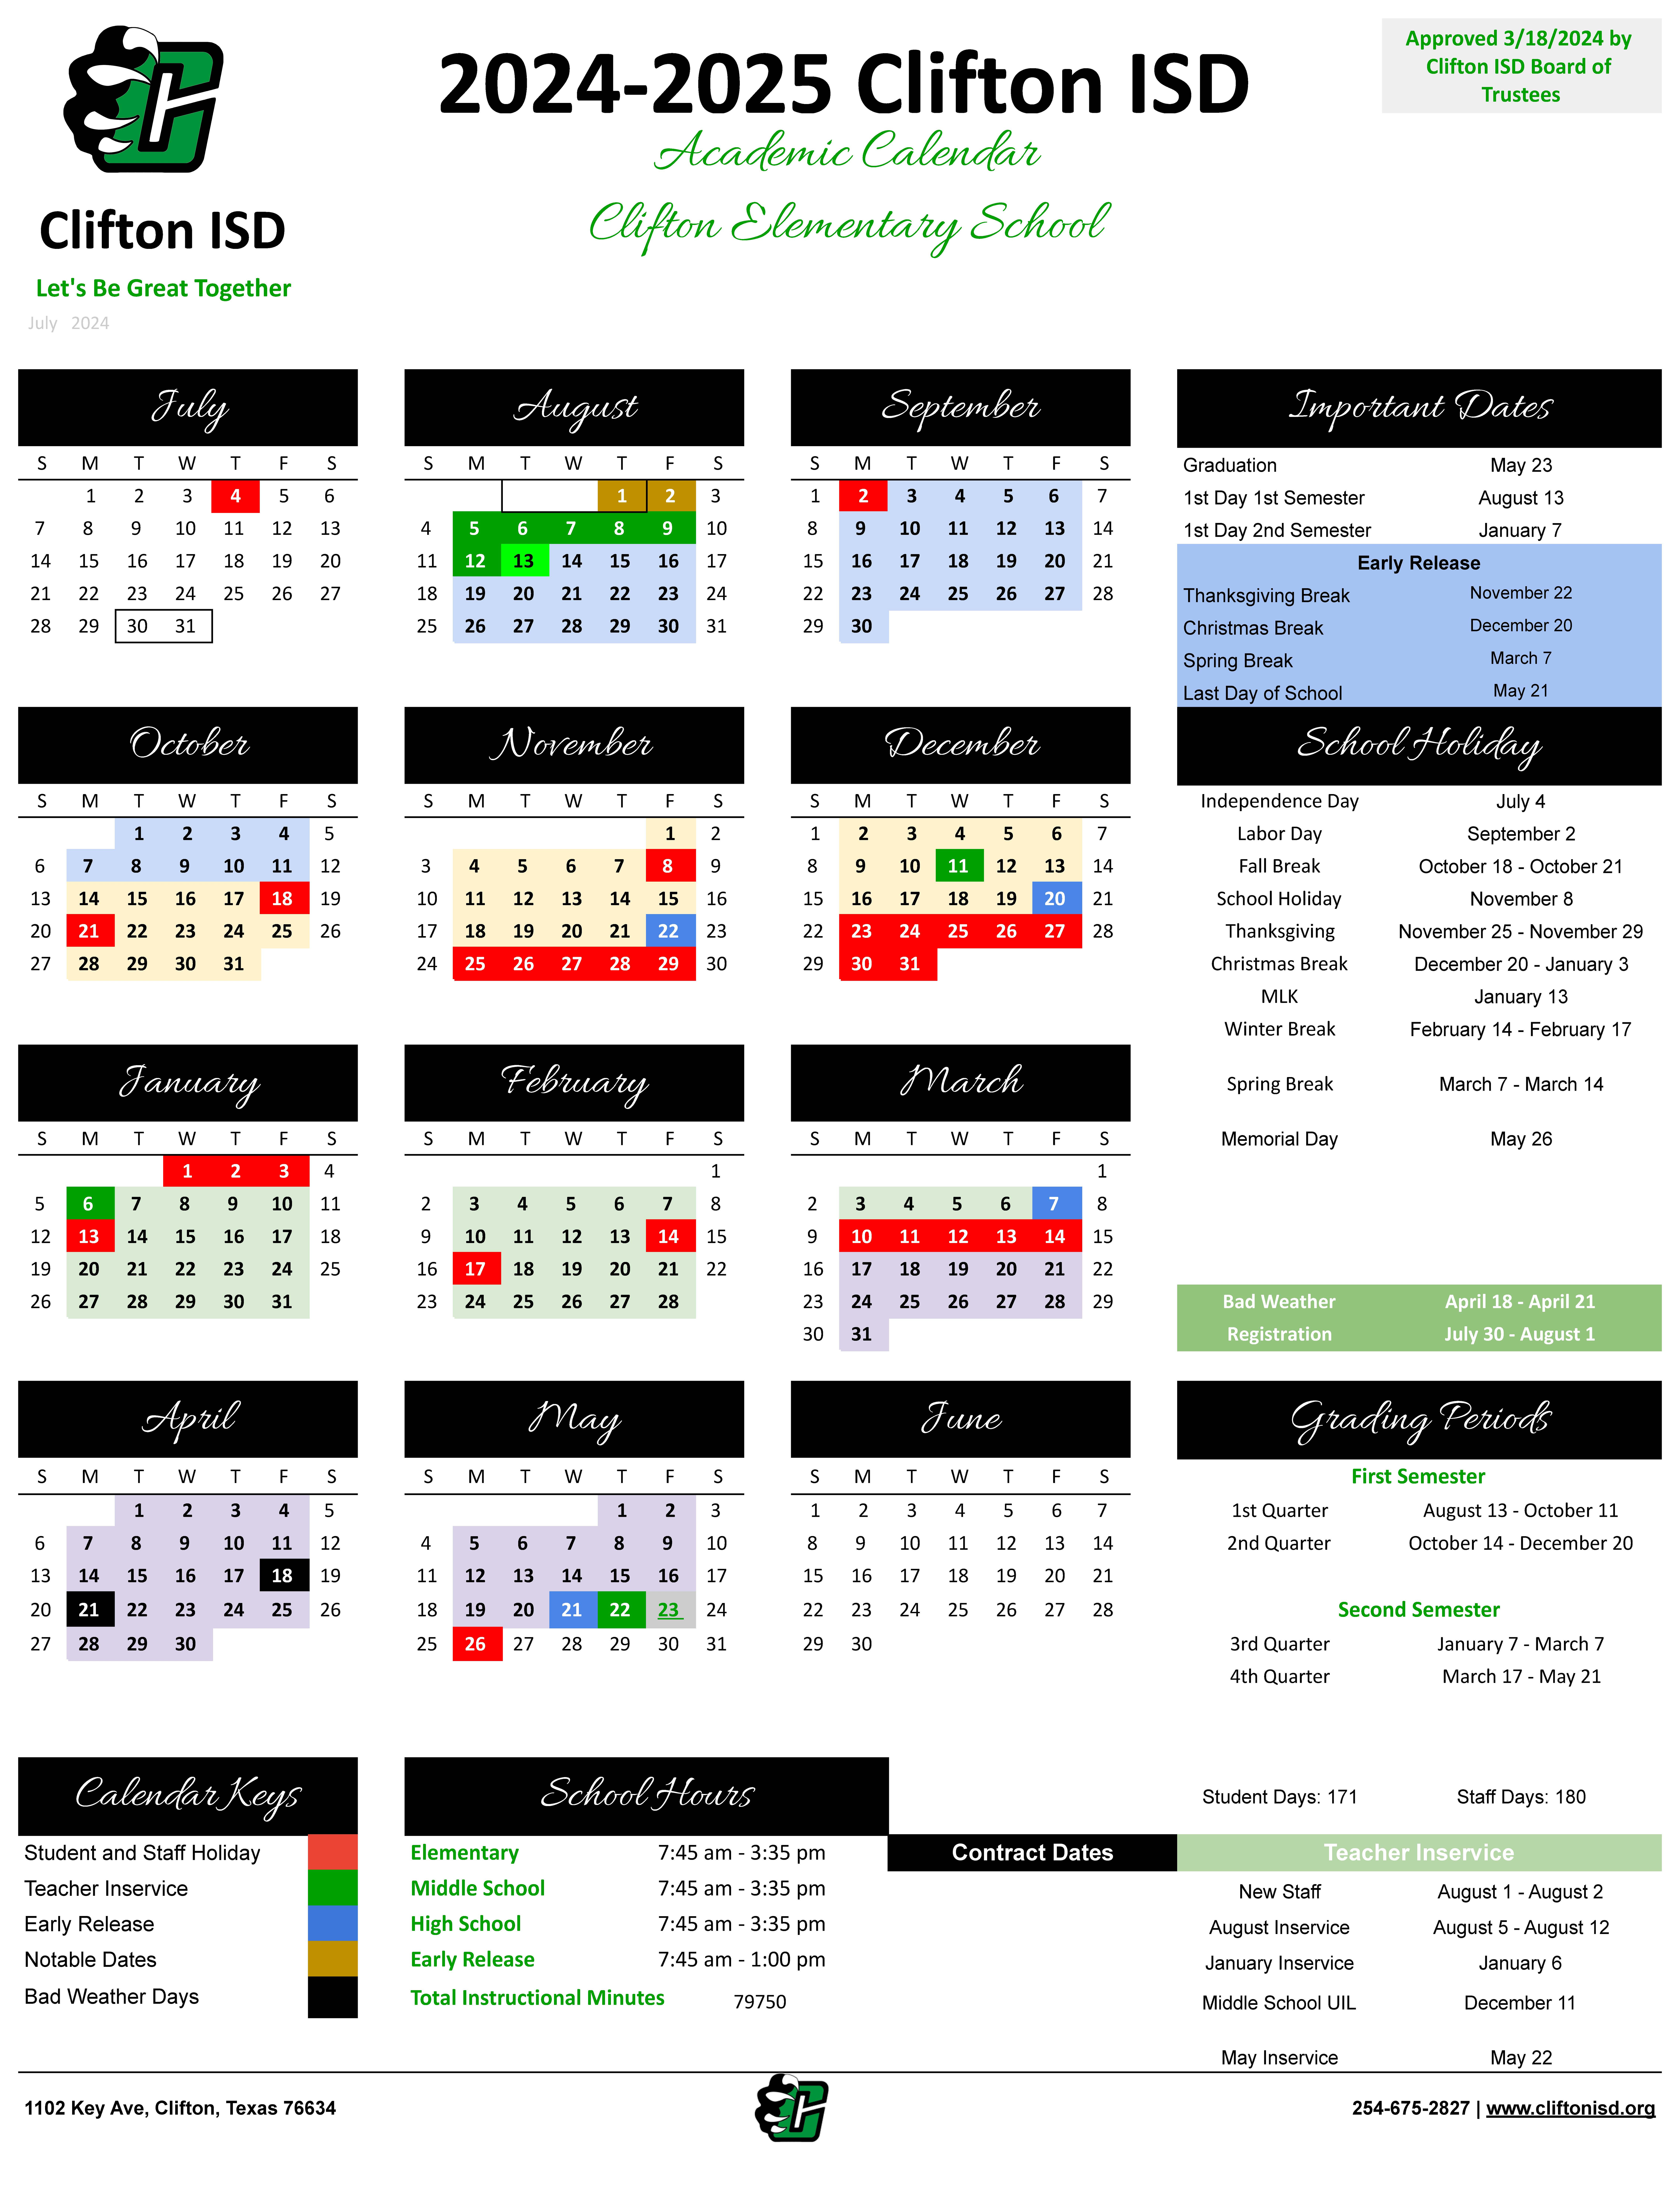 Clifton Elementary 9-week academic calendar